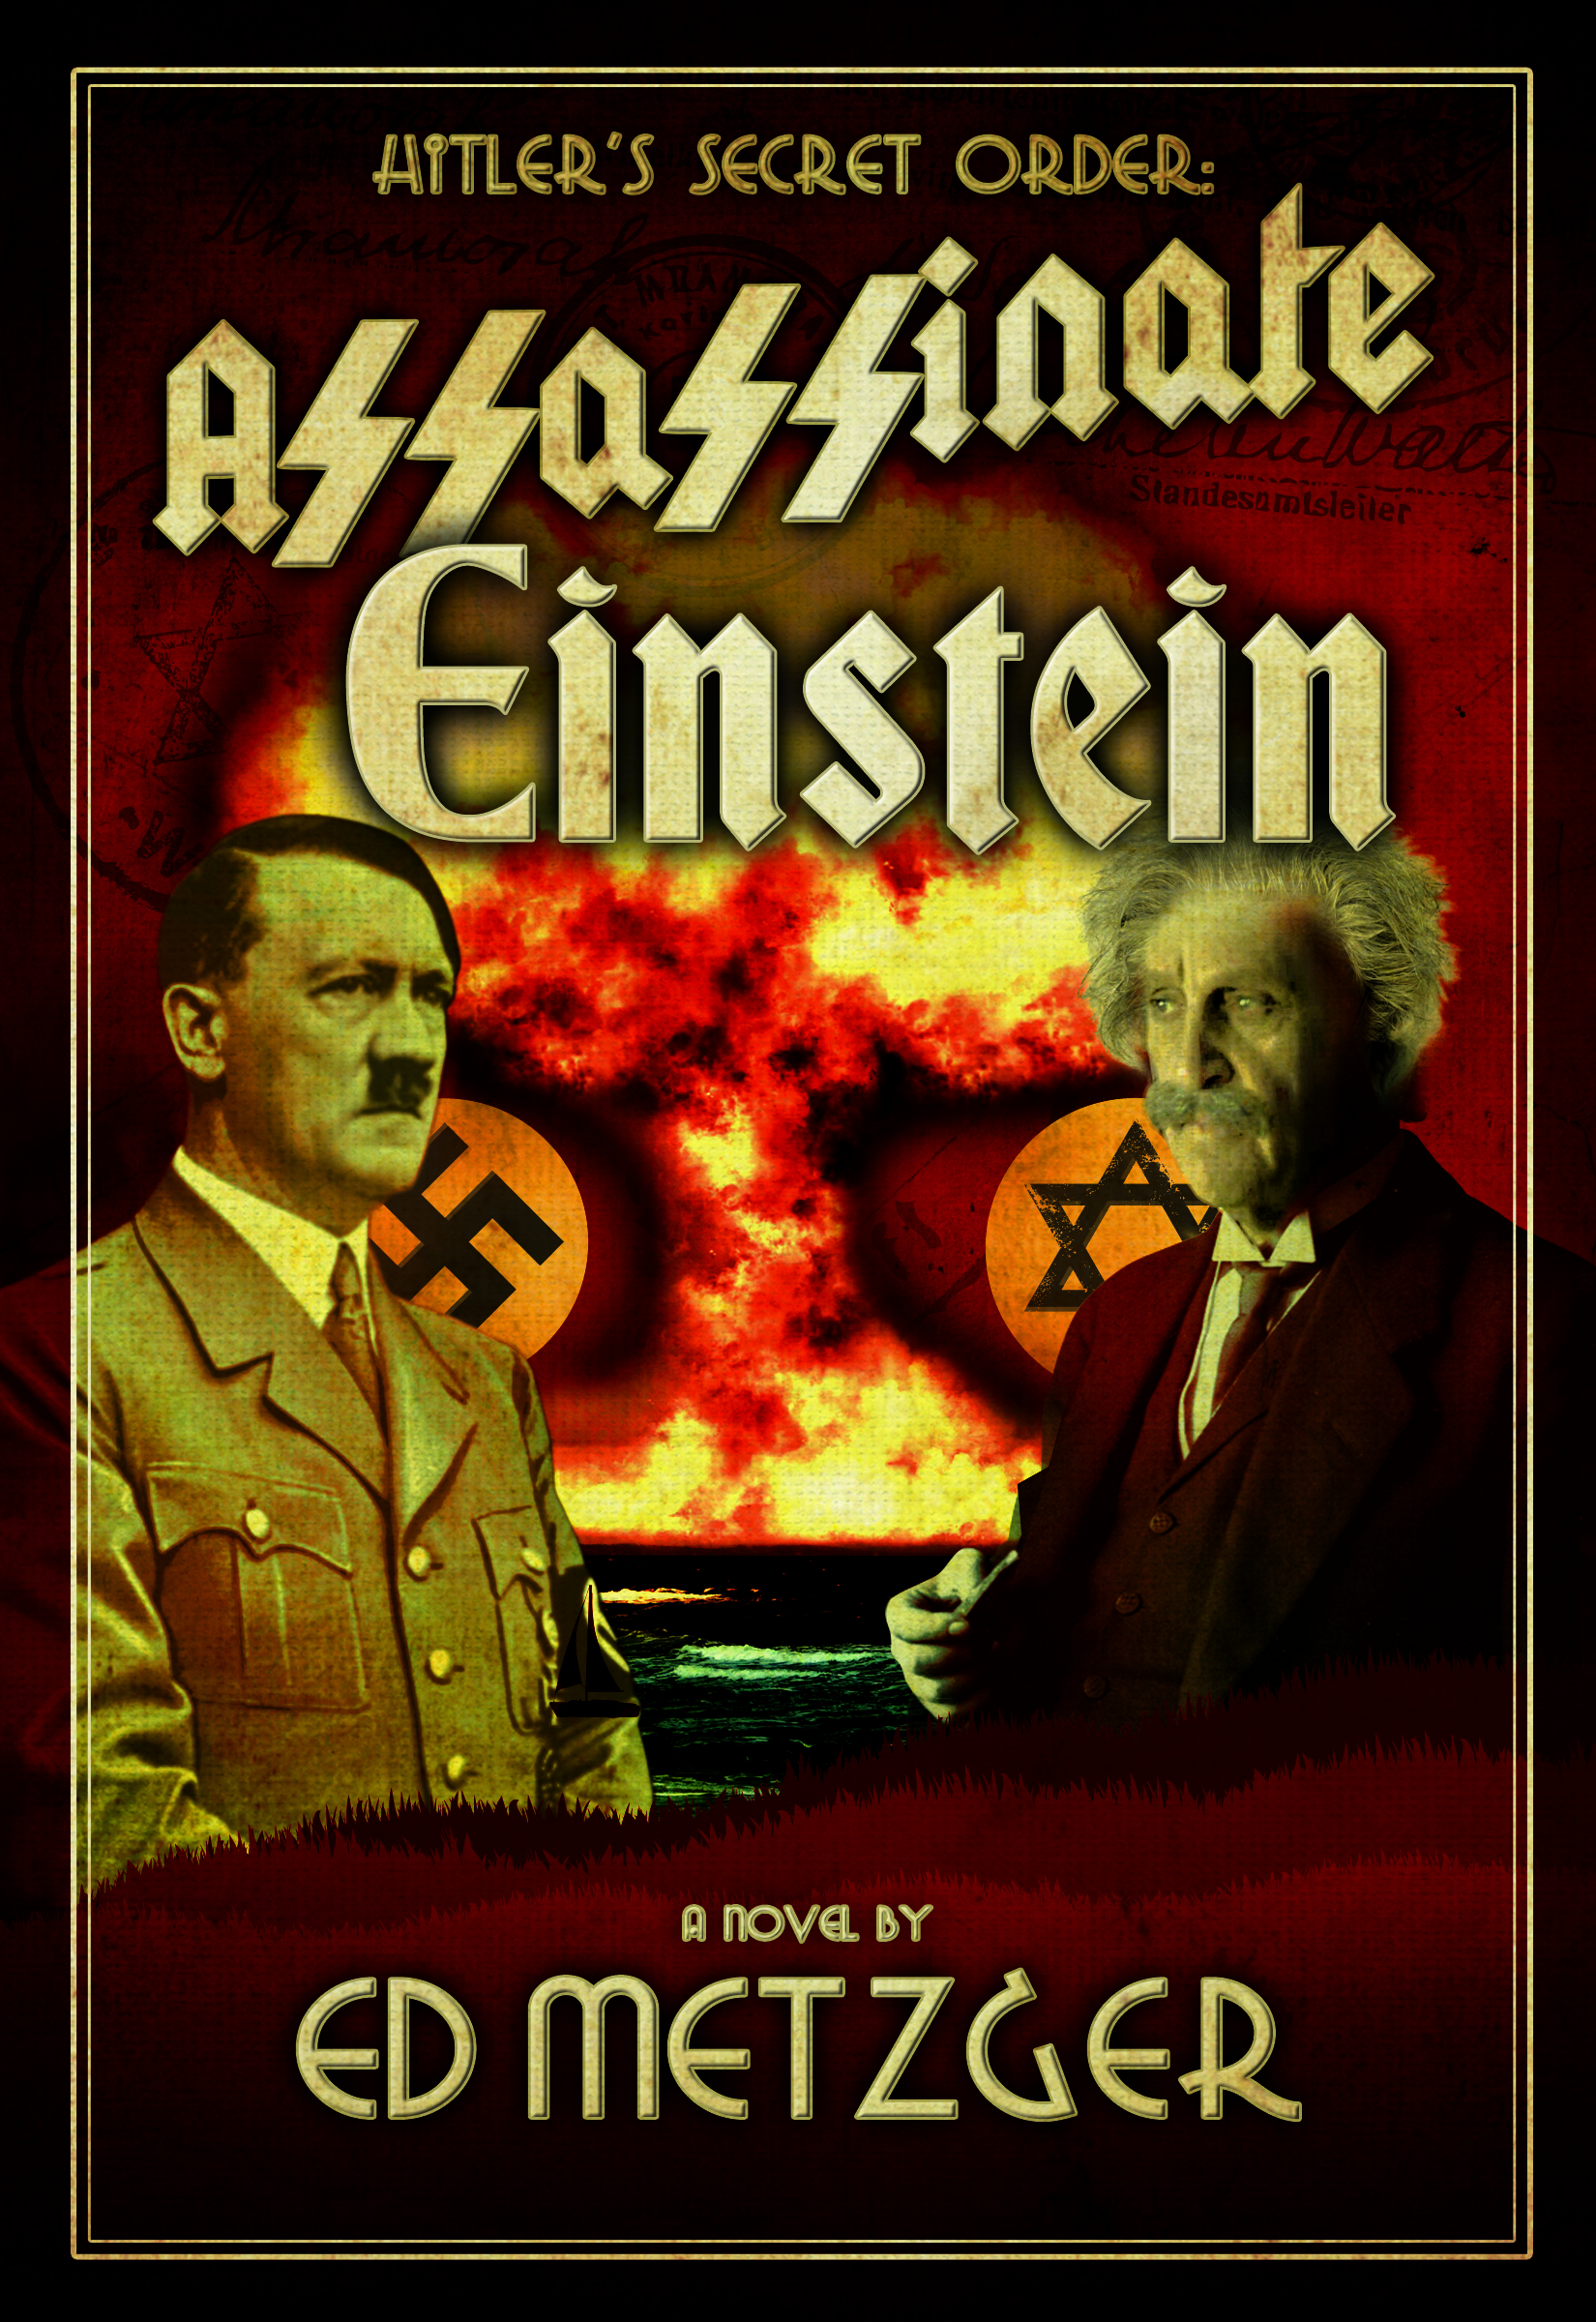 ED METZGER's historical thriller novel, ASSASSINATE EINSTEIN, available on eBooks, Kindle or Nook.